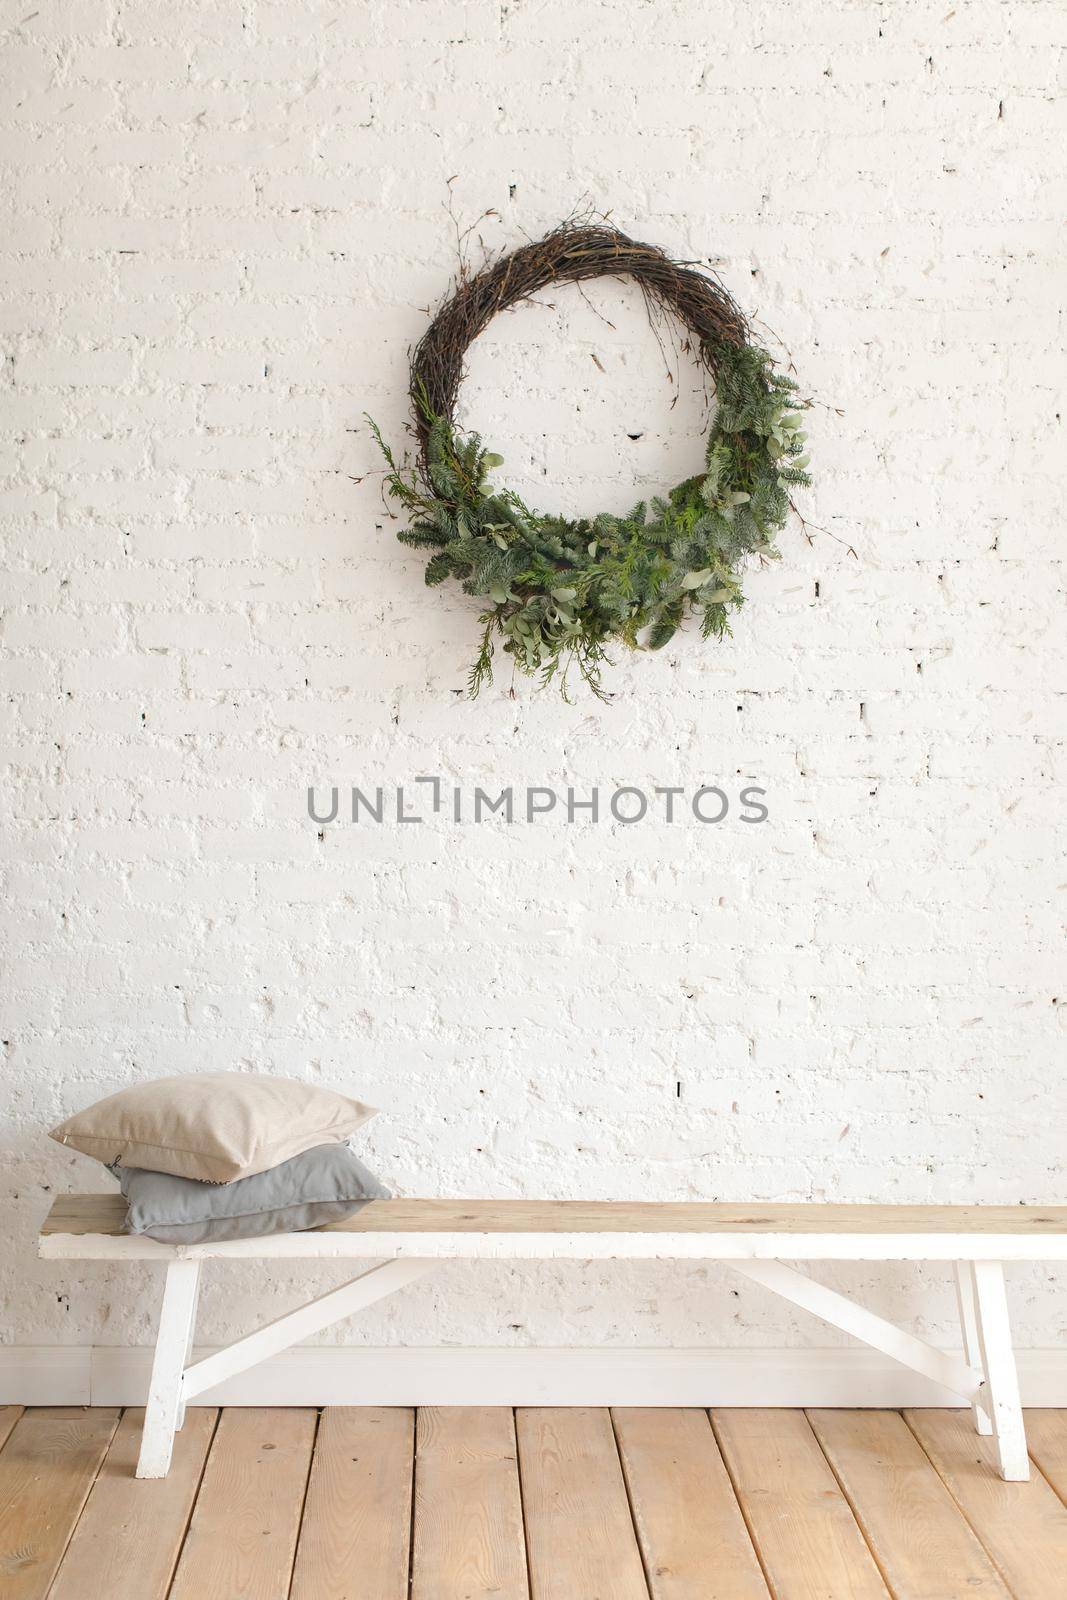 Wreath hanging over bench by Demkat